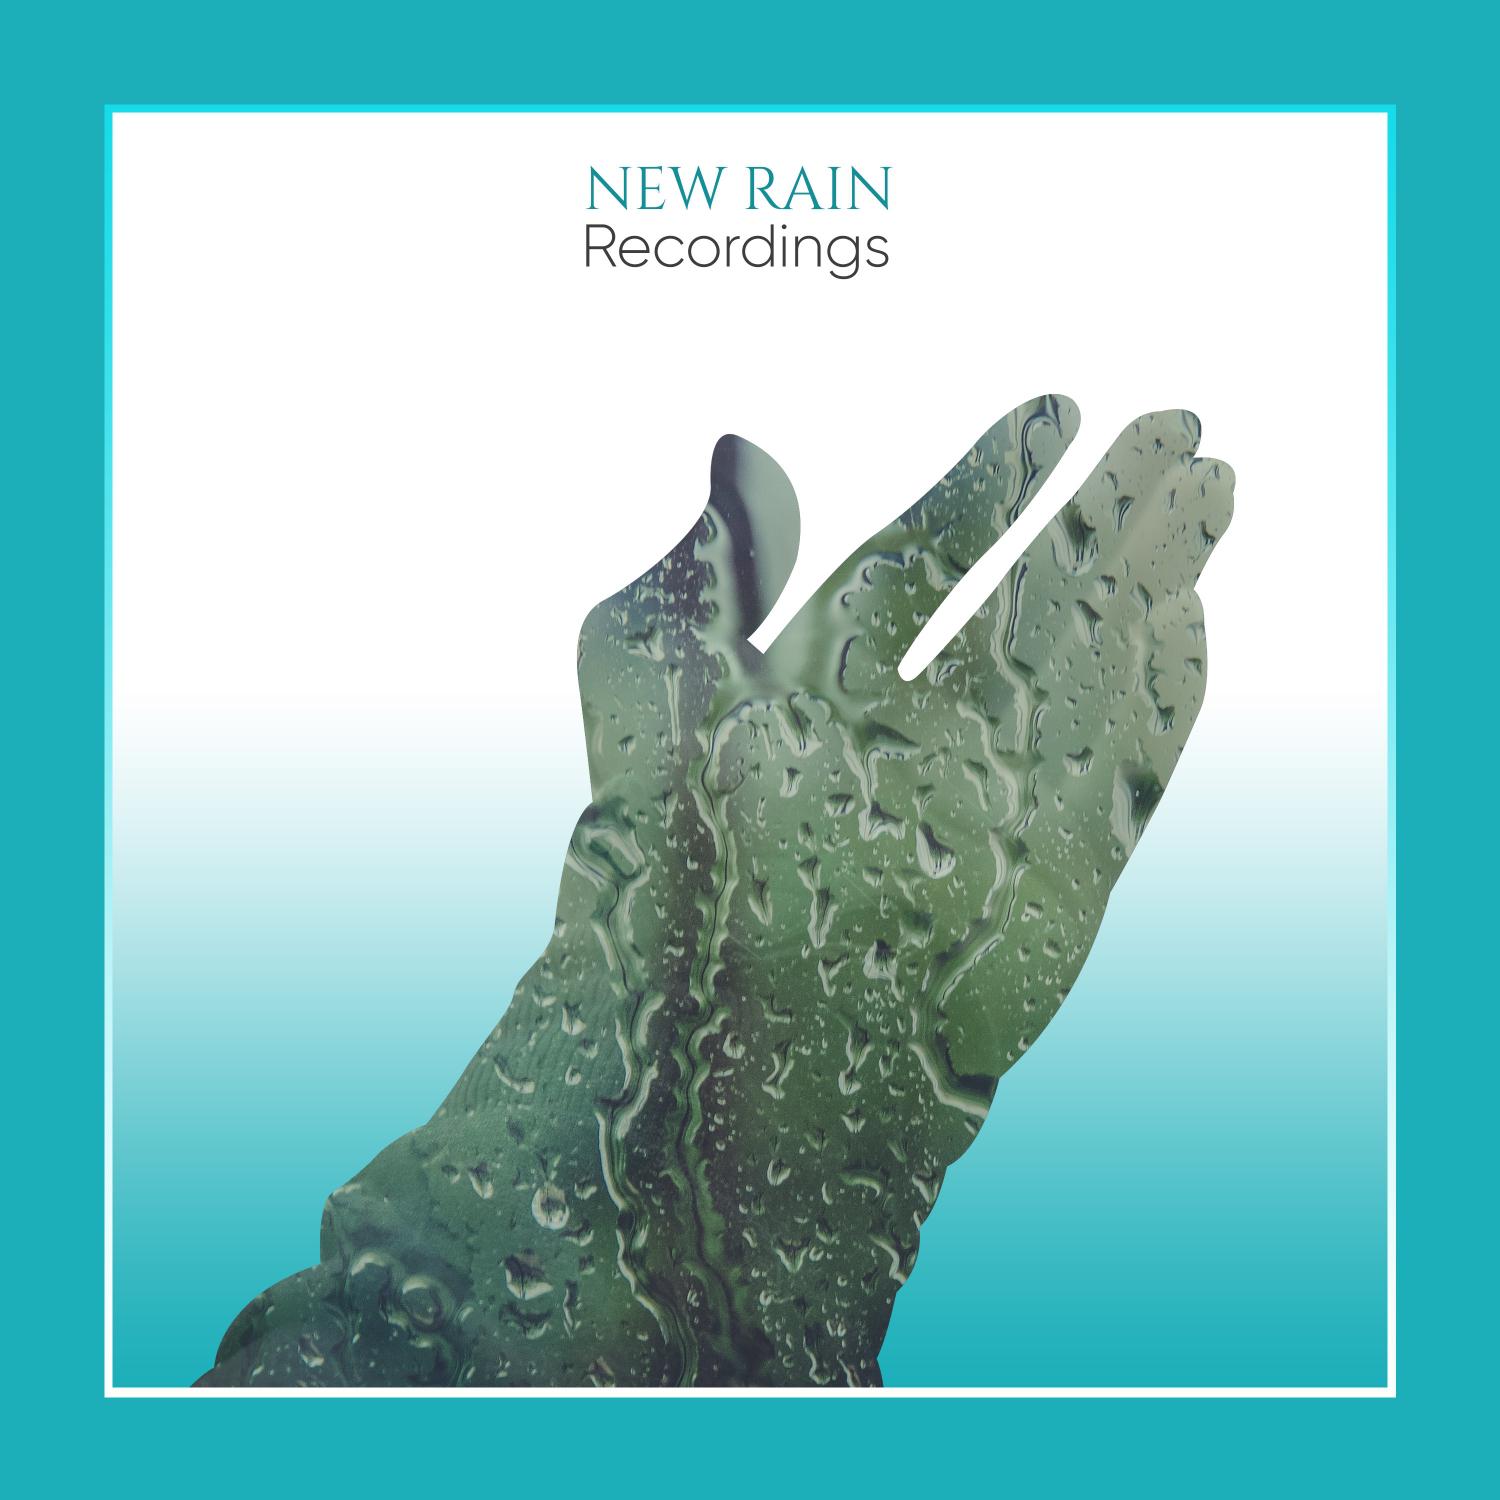 15 New Rain Recordings - Zen Music, Nature, White Noise